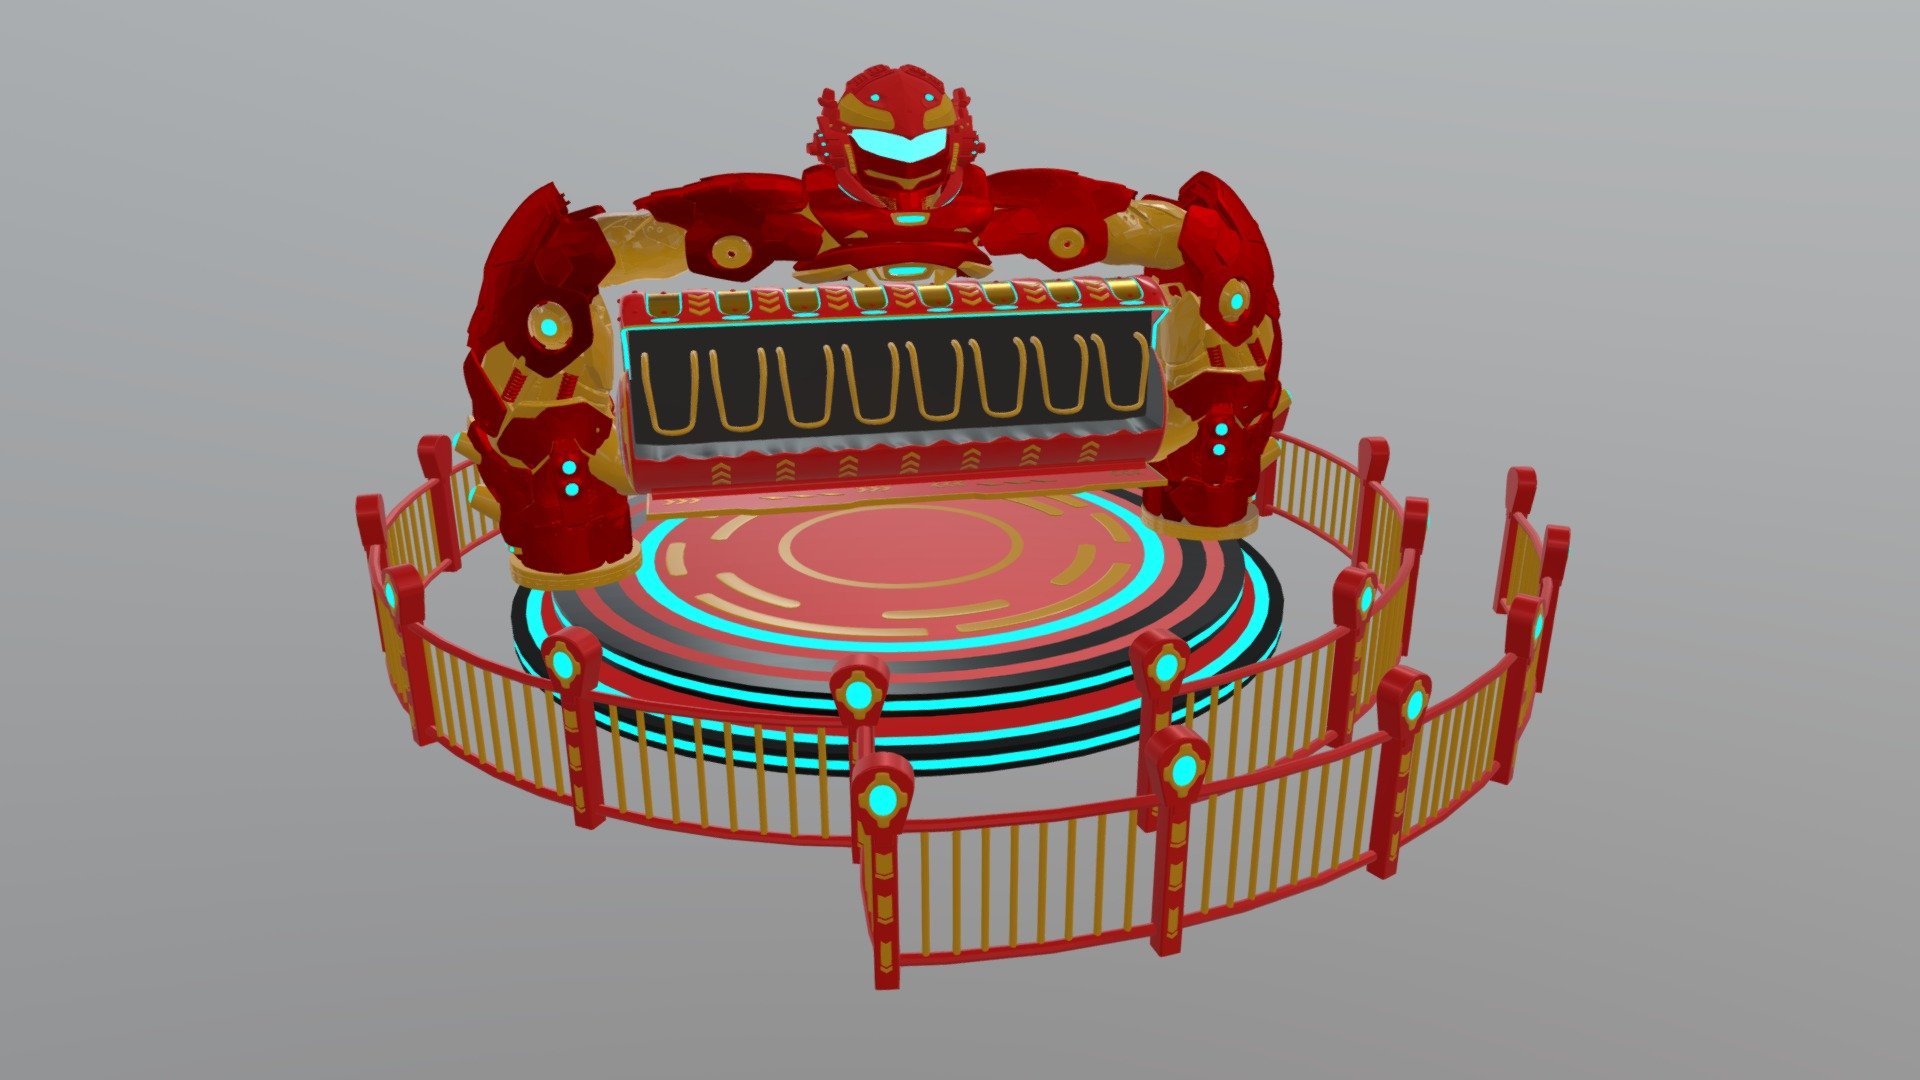 Amusement Park Equipment model.

The 3D model of Amusement Park Equipment.

Hope you like it 3d model